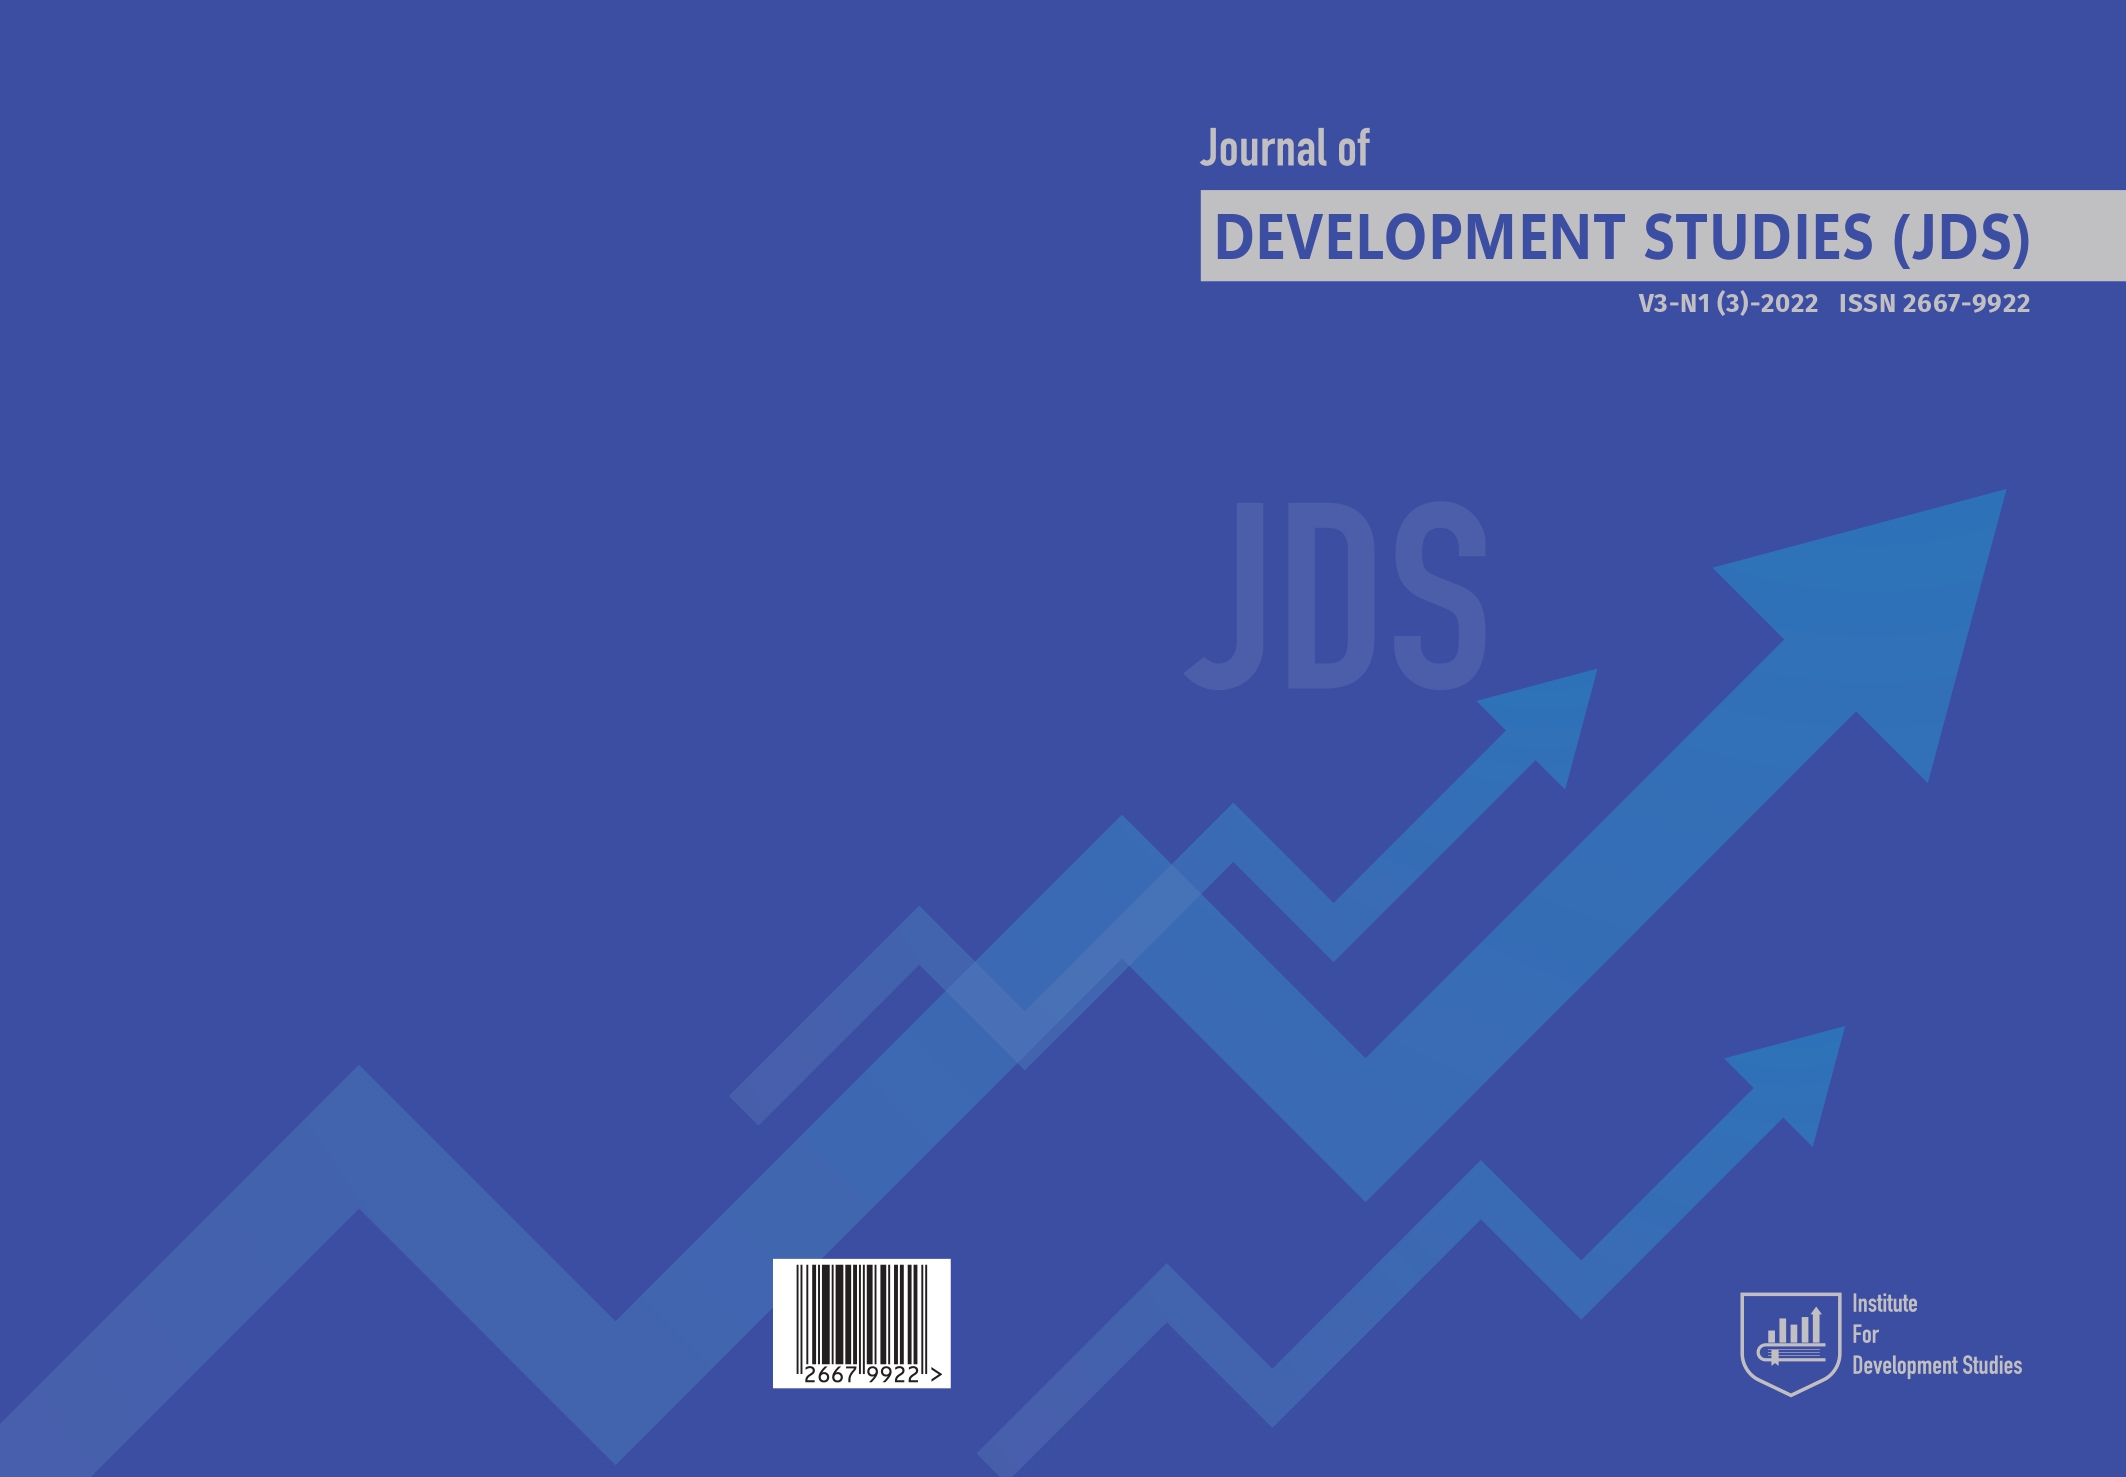 					View Vol. 3 No. 3 (2022): The Journal of Development Studies
				